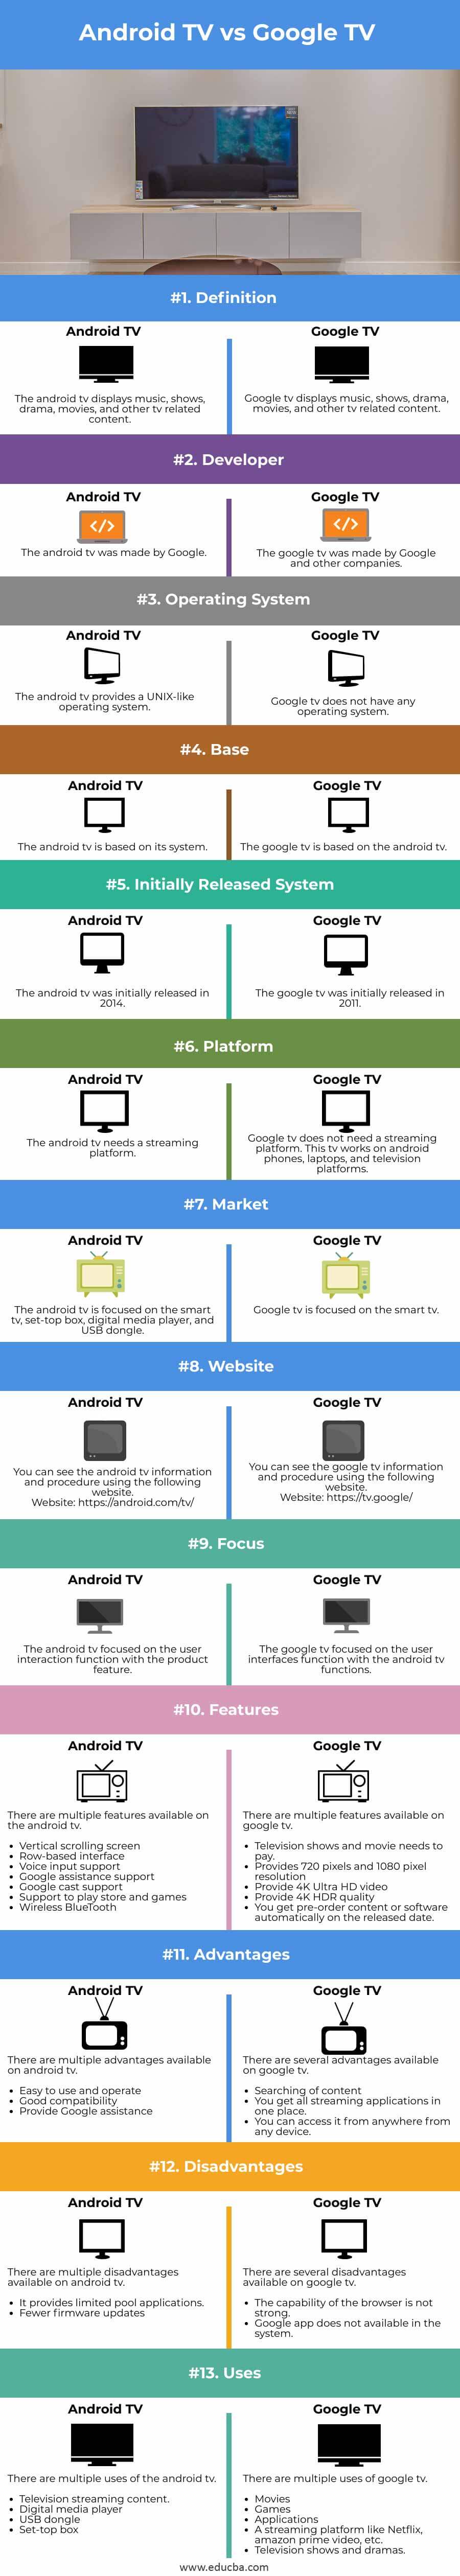 Android-TV-vs-Google-TV-info